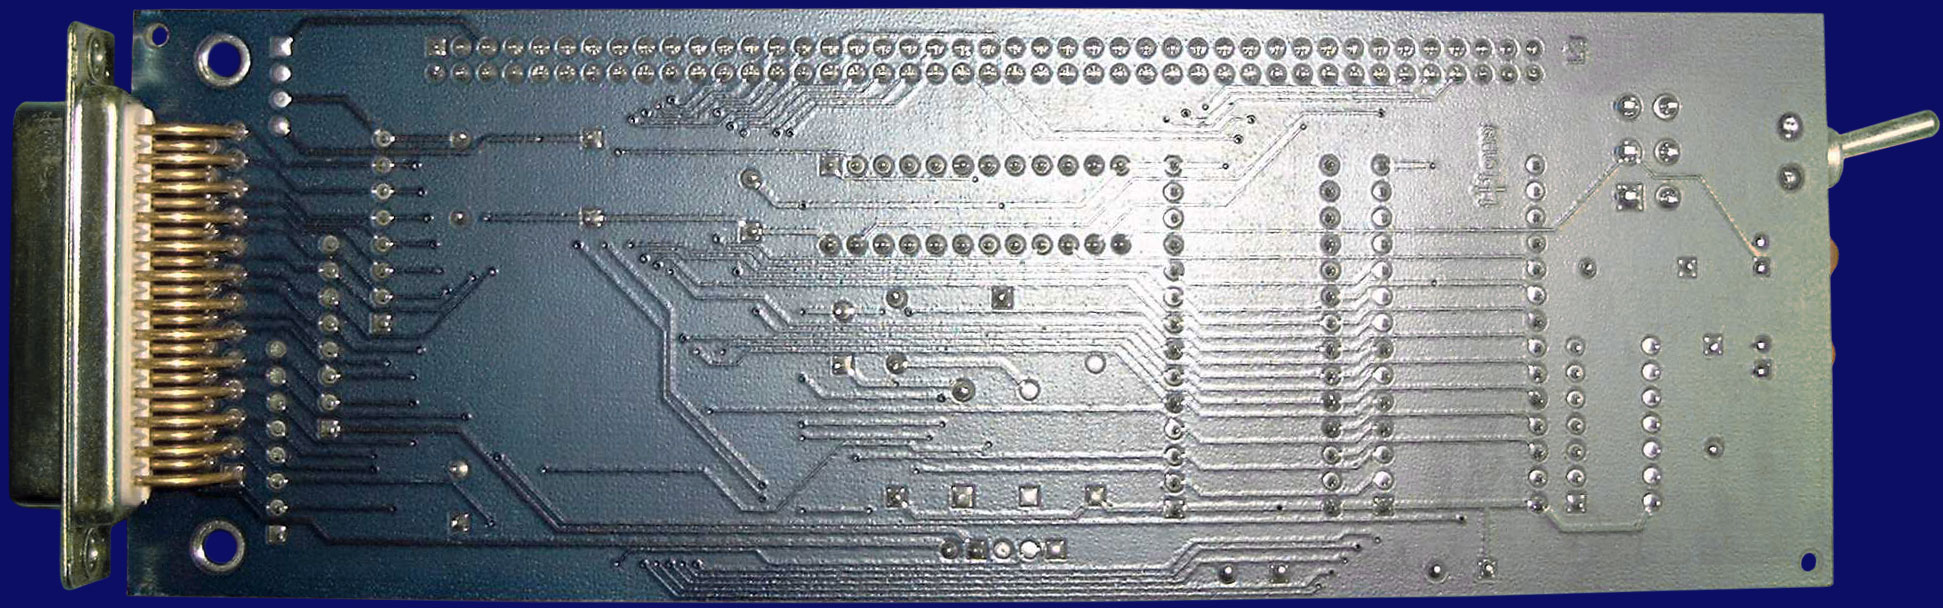 Elaborate Bytes / BSC A.L.F. 2 - BSC A.L.F. 2 SCSI 500 controller card, back side